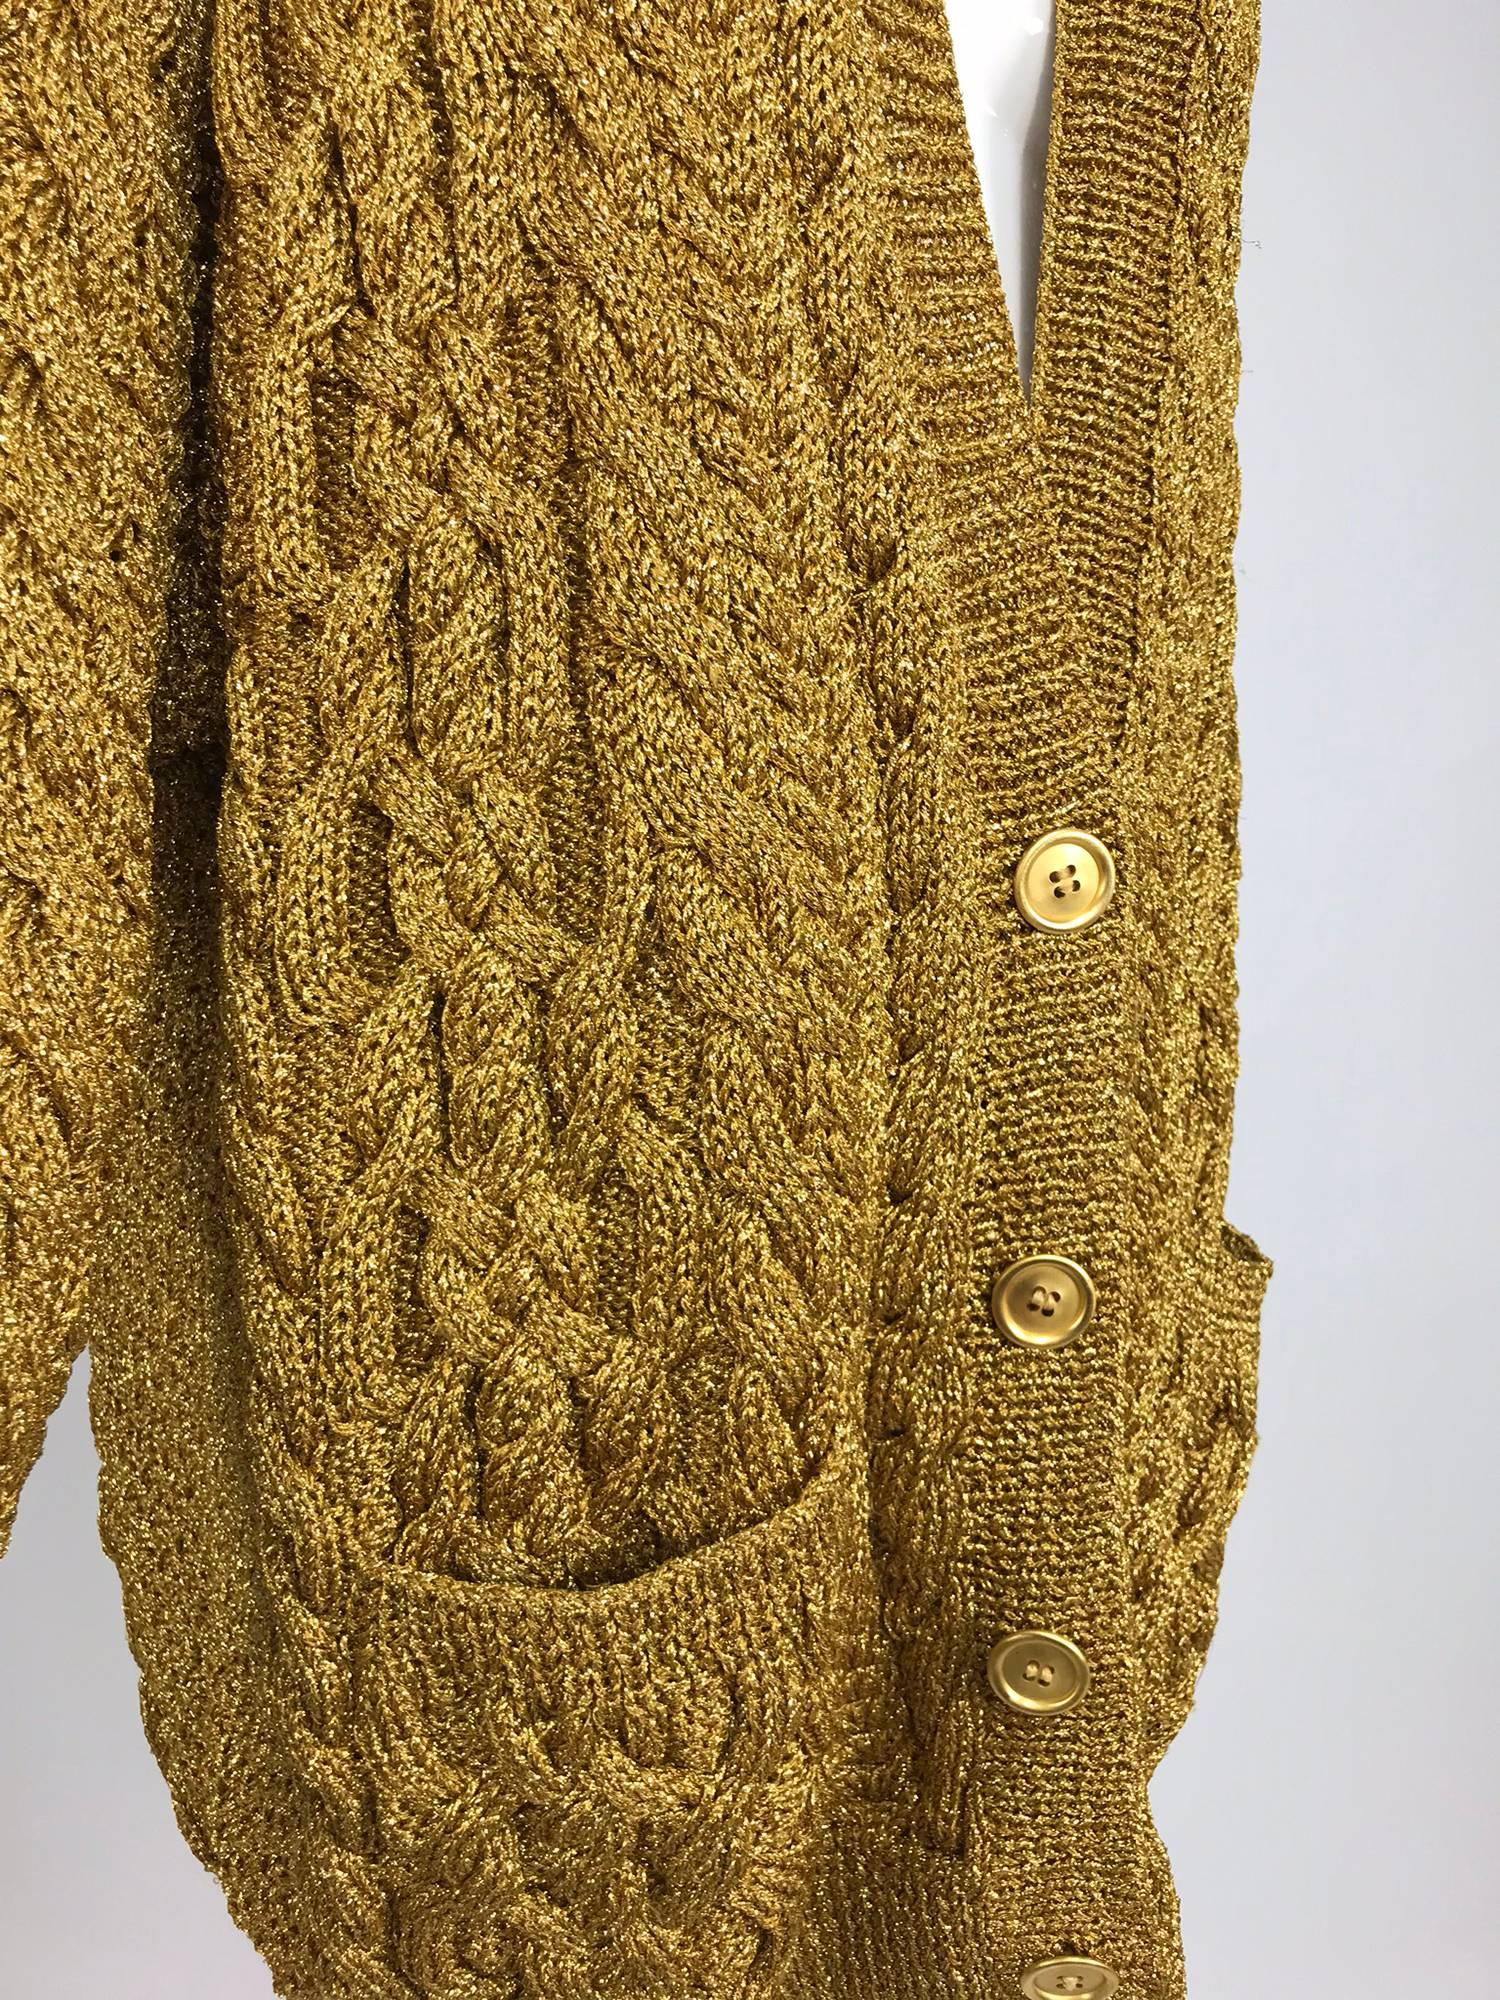 Anne Klein chunky gold metallic knit cardigan sweater 1990s 7